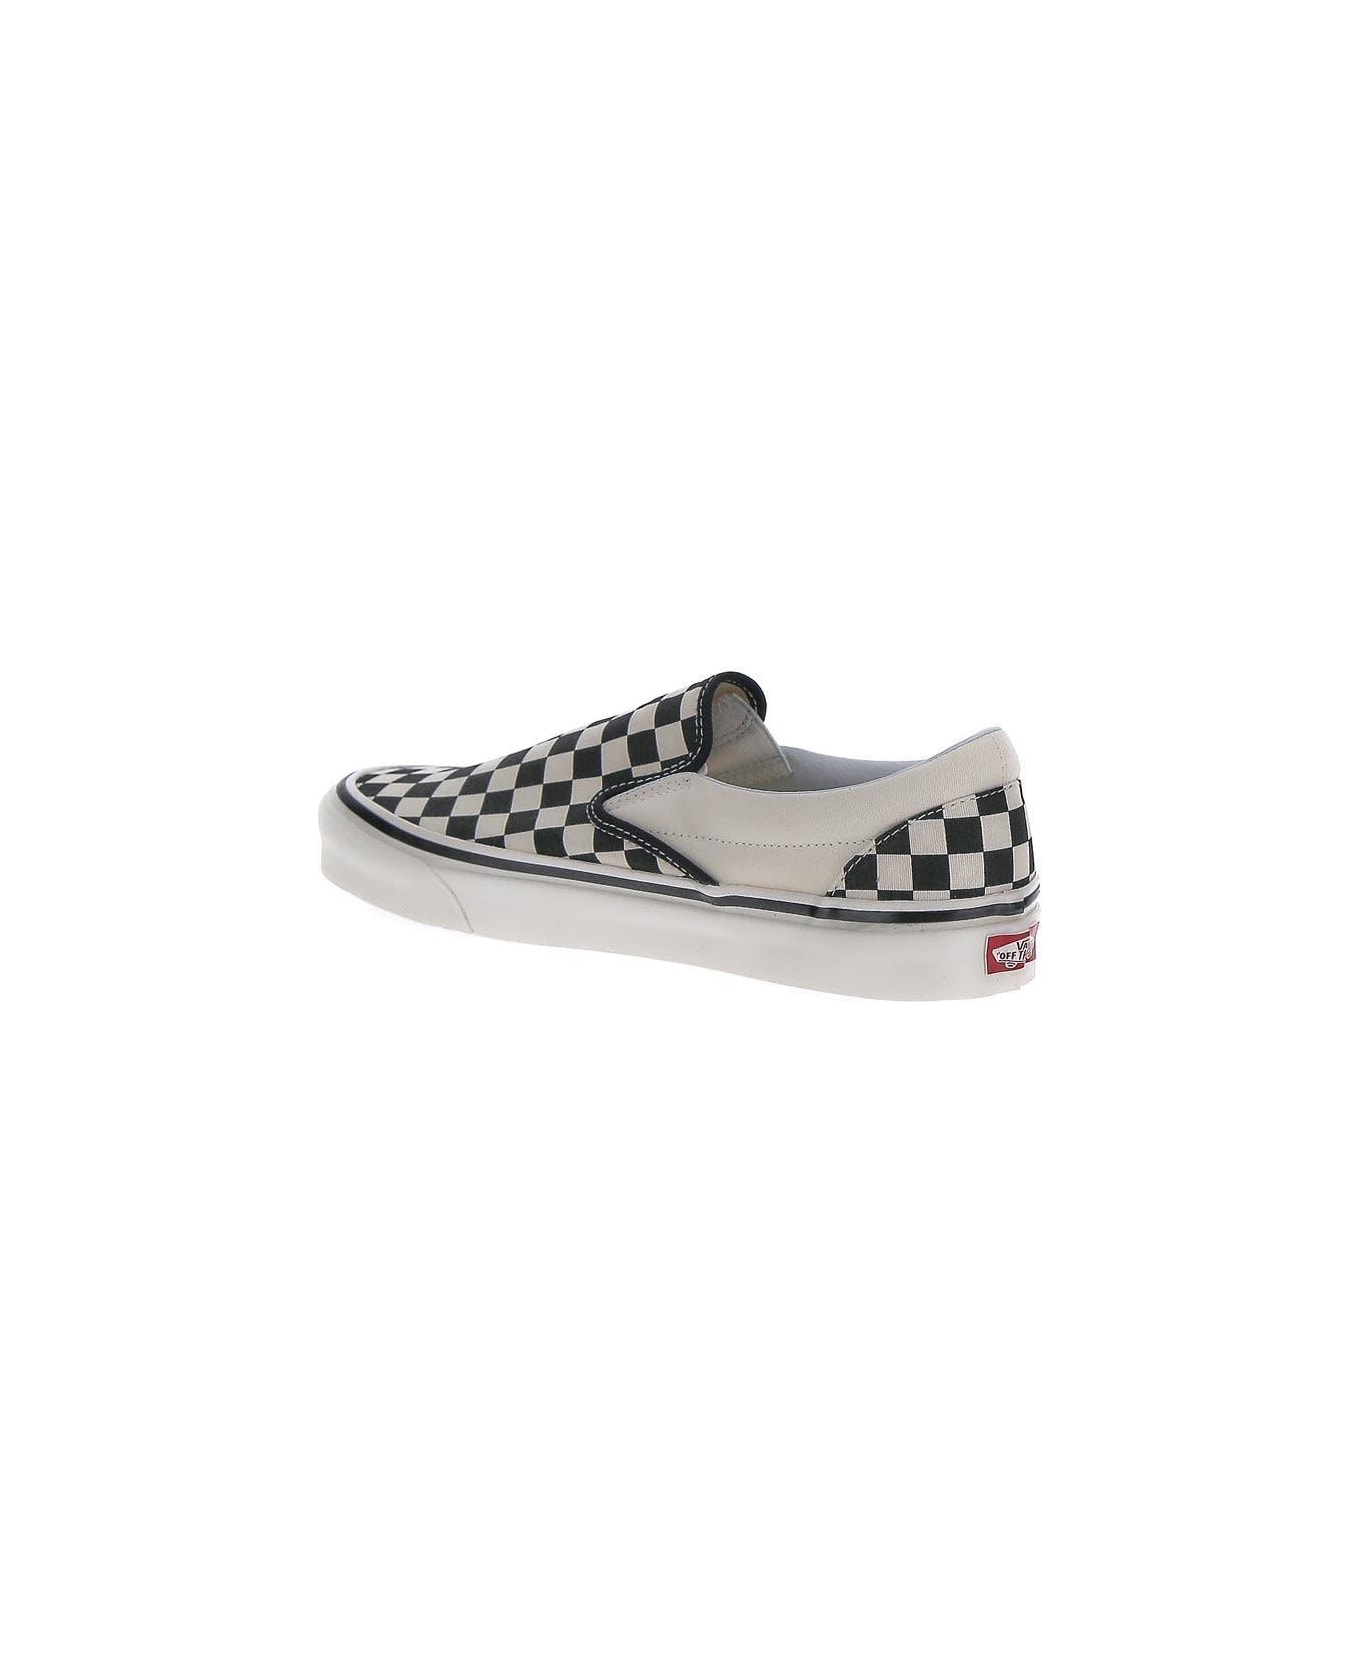 Vans Classic Slip-on 9 Sneakers - Grey